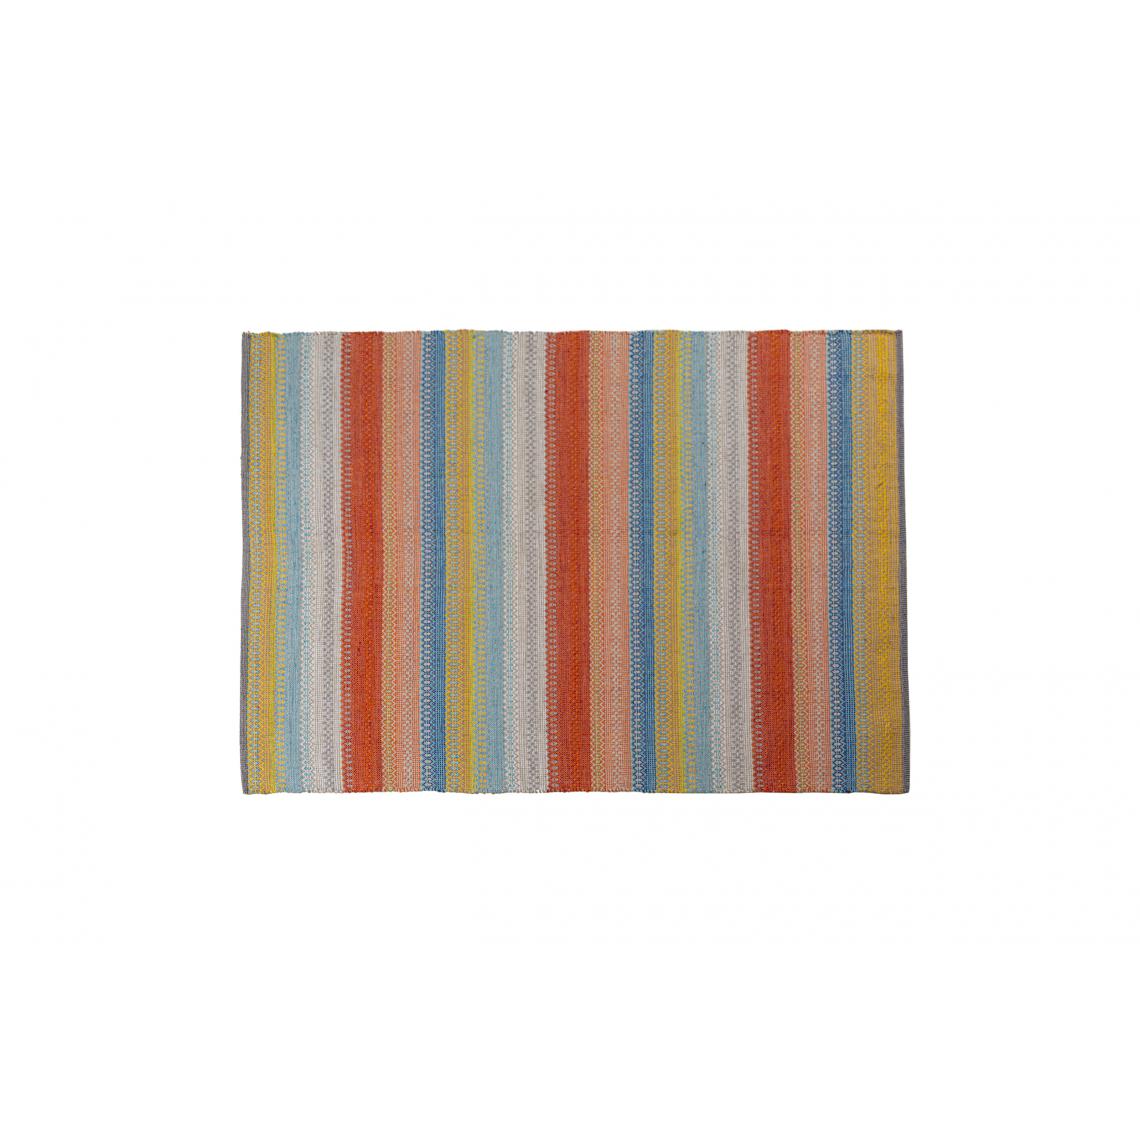 Alter - Tapis moderne Cleveland, style kilim, 100% coton, multicolore, 230x160cm - Tapis